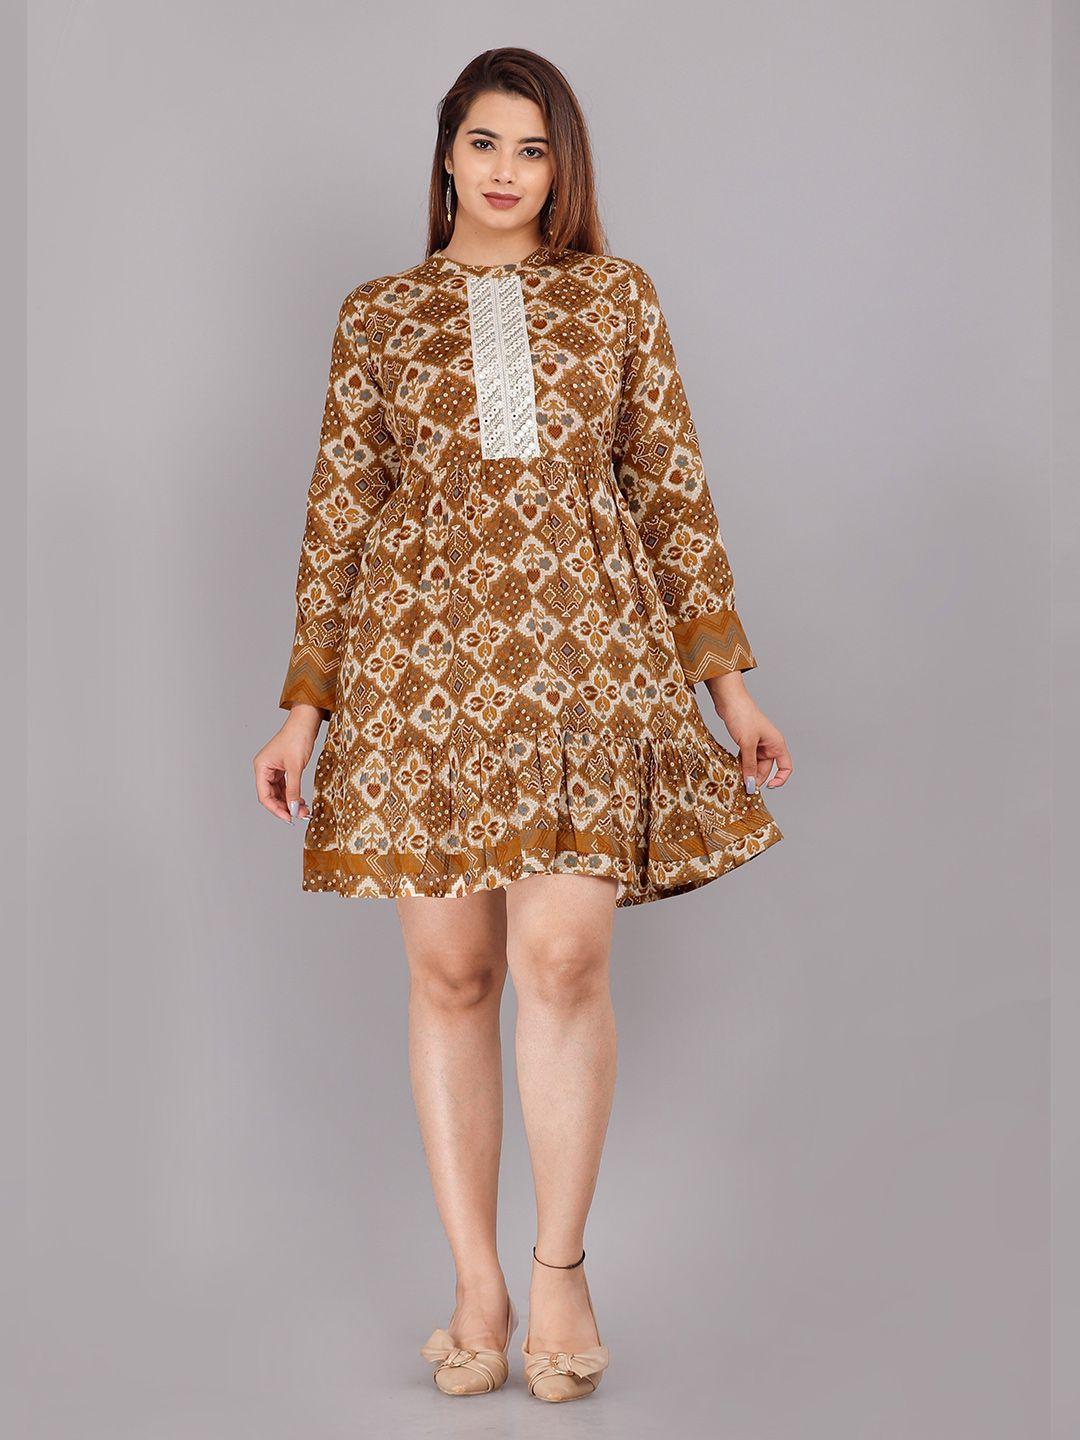 kalini-brown-and-white-ethnic-motifs-print-cotton-cambric-round-neck-ethnic-dress